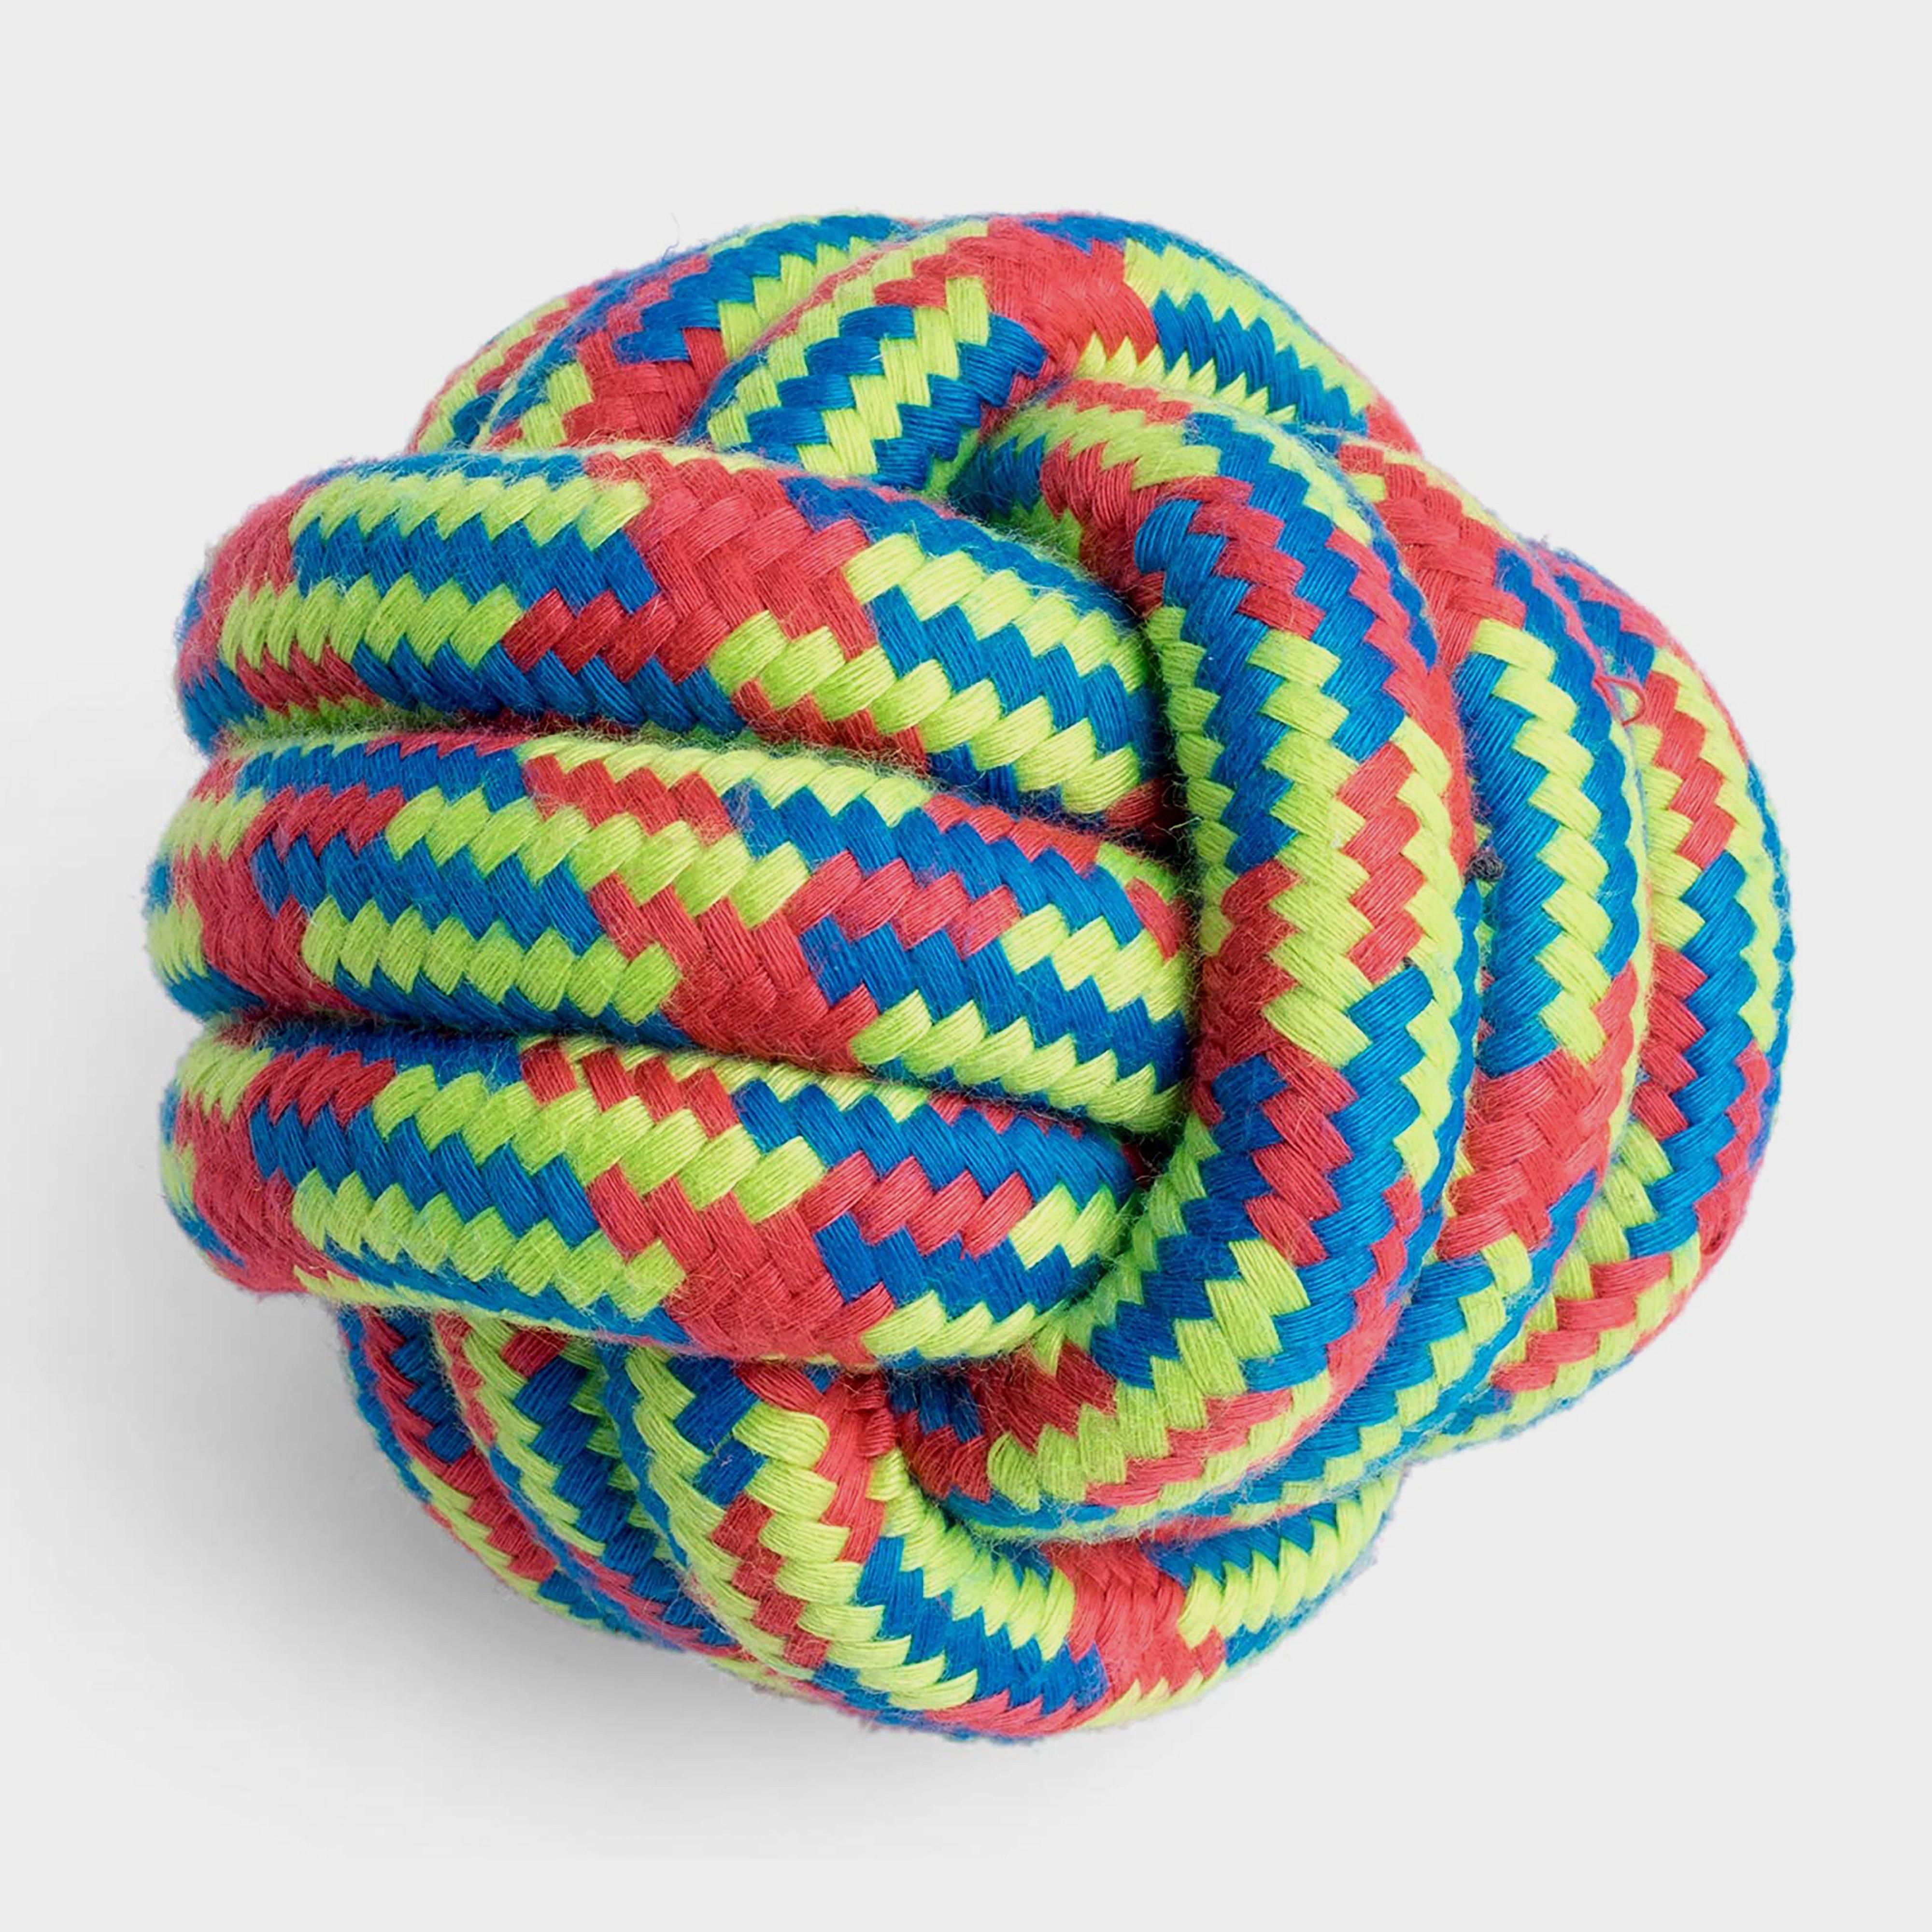 Petface Toyz Woven Rope, Multi Coloured